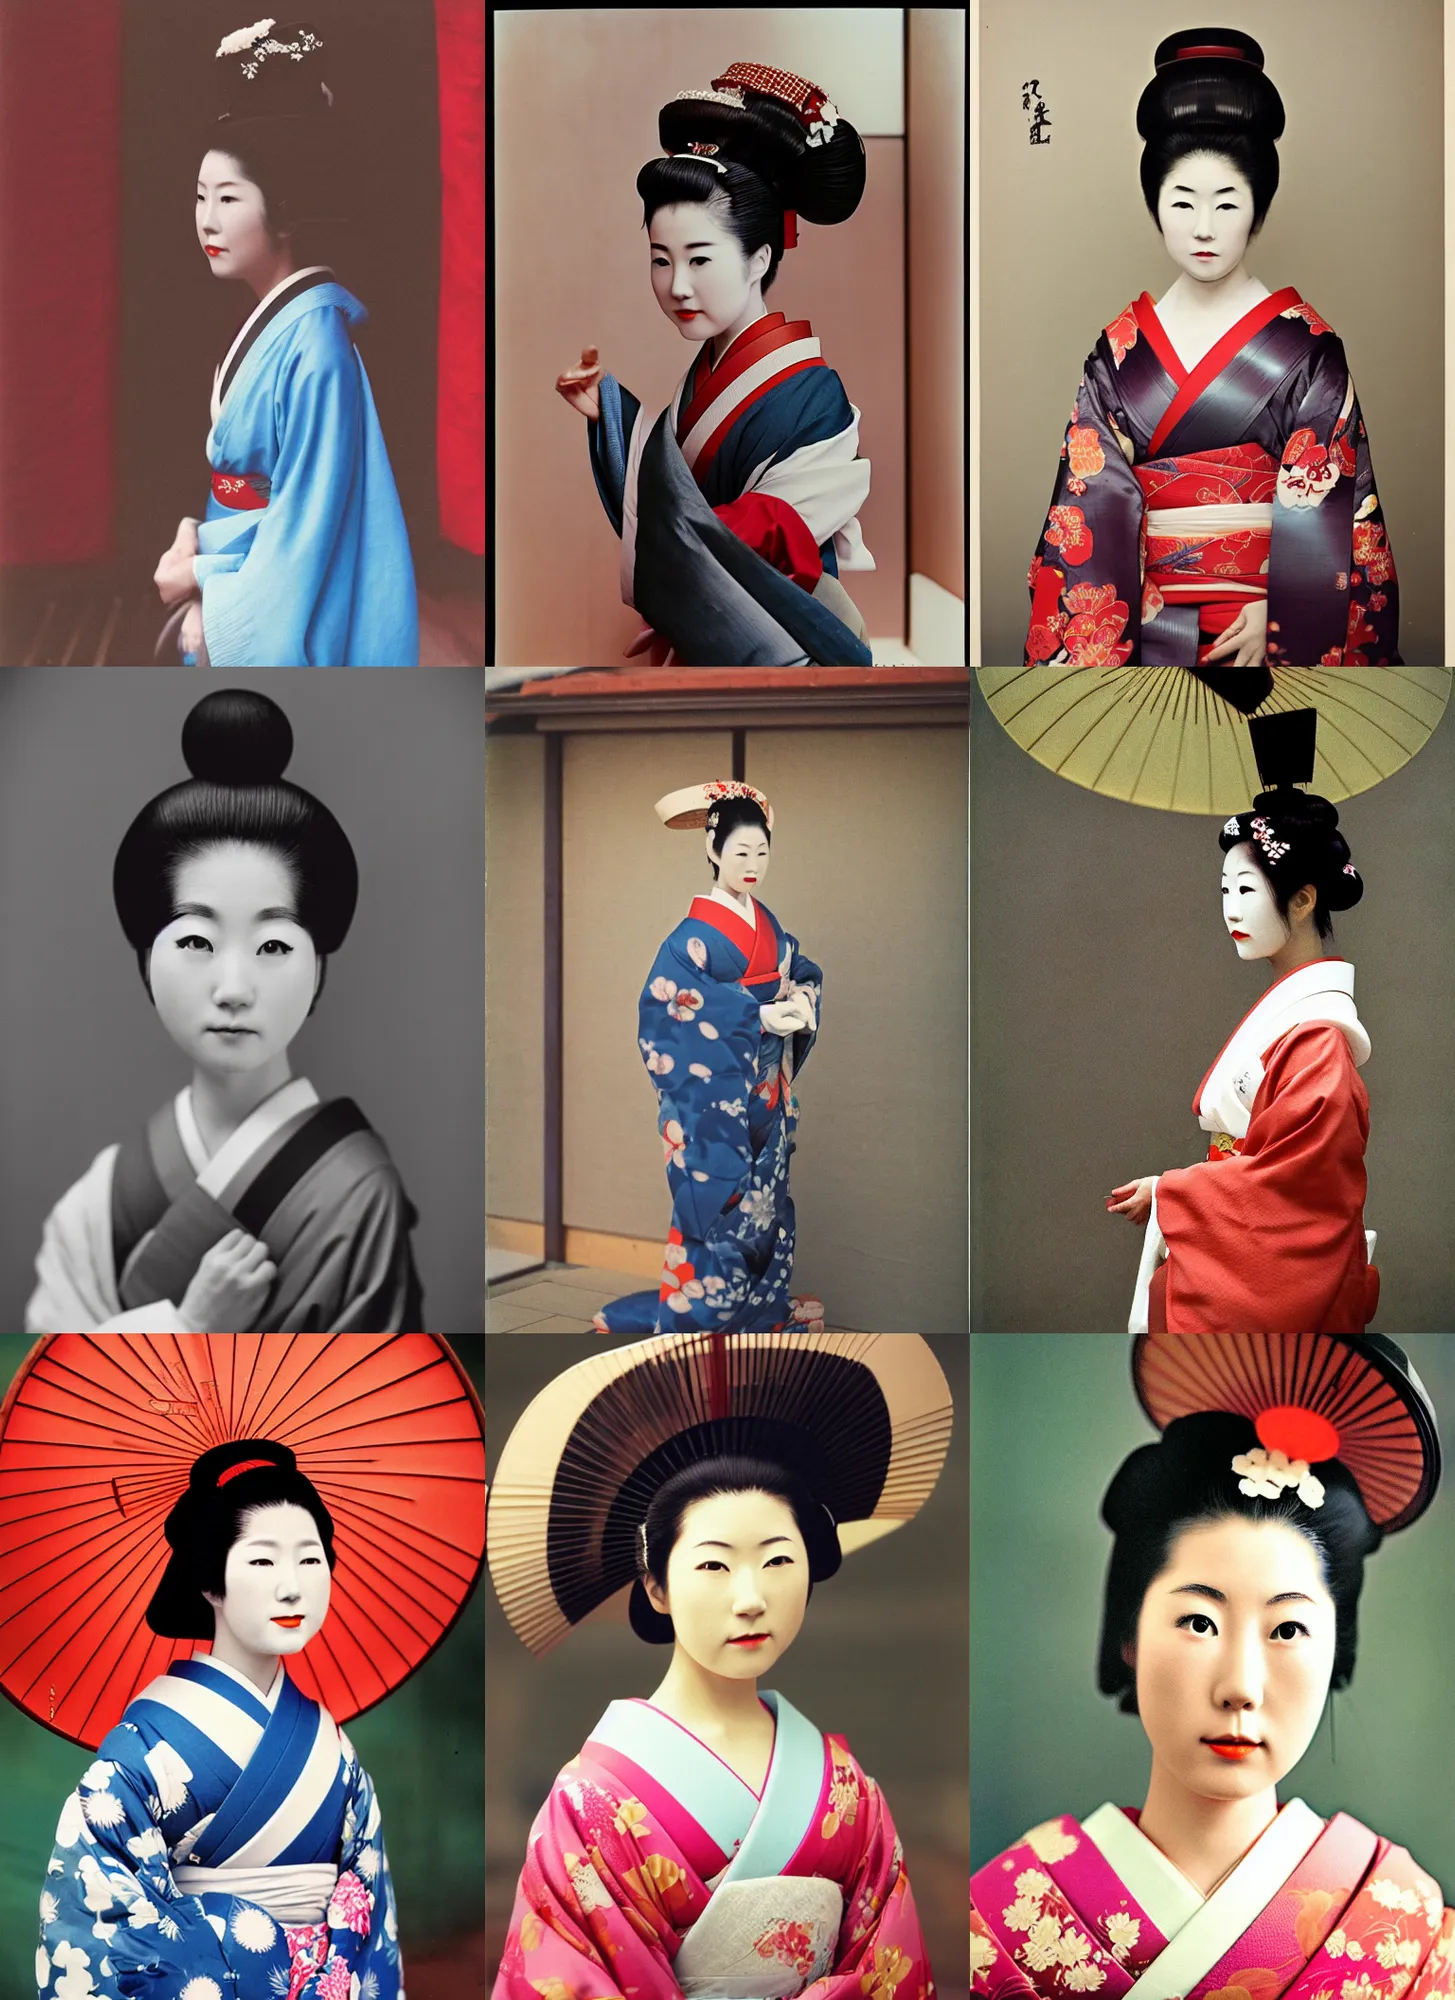 Prompt: Portrait Photograph of a Japanese Geisha Kodachrome 200